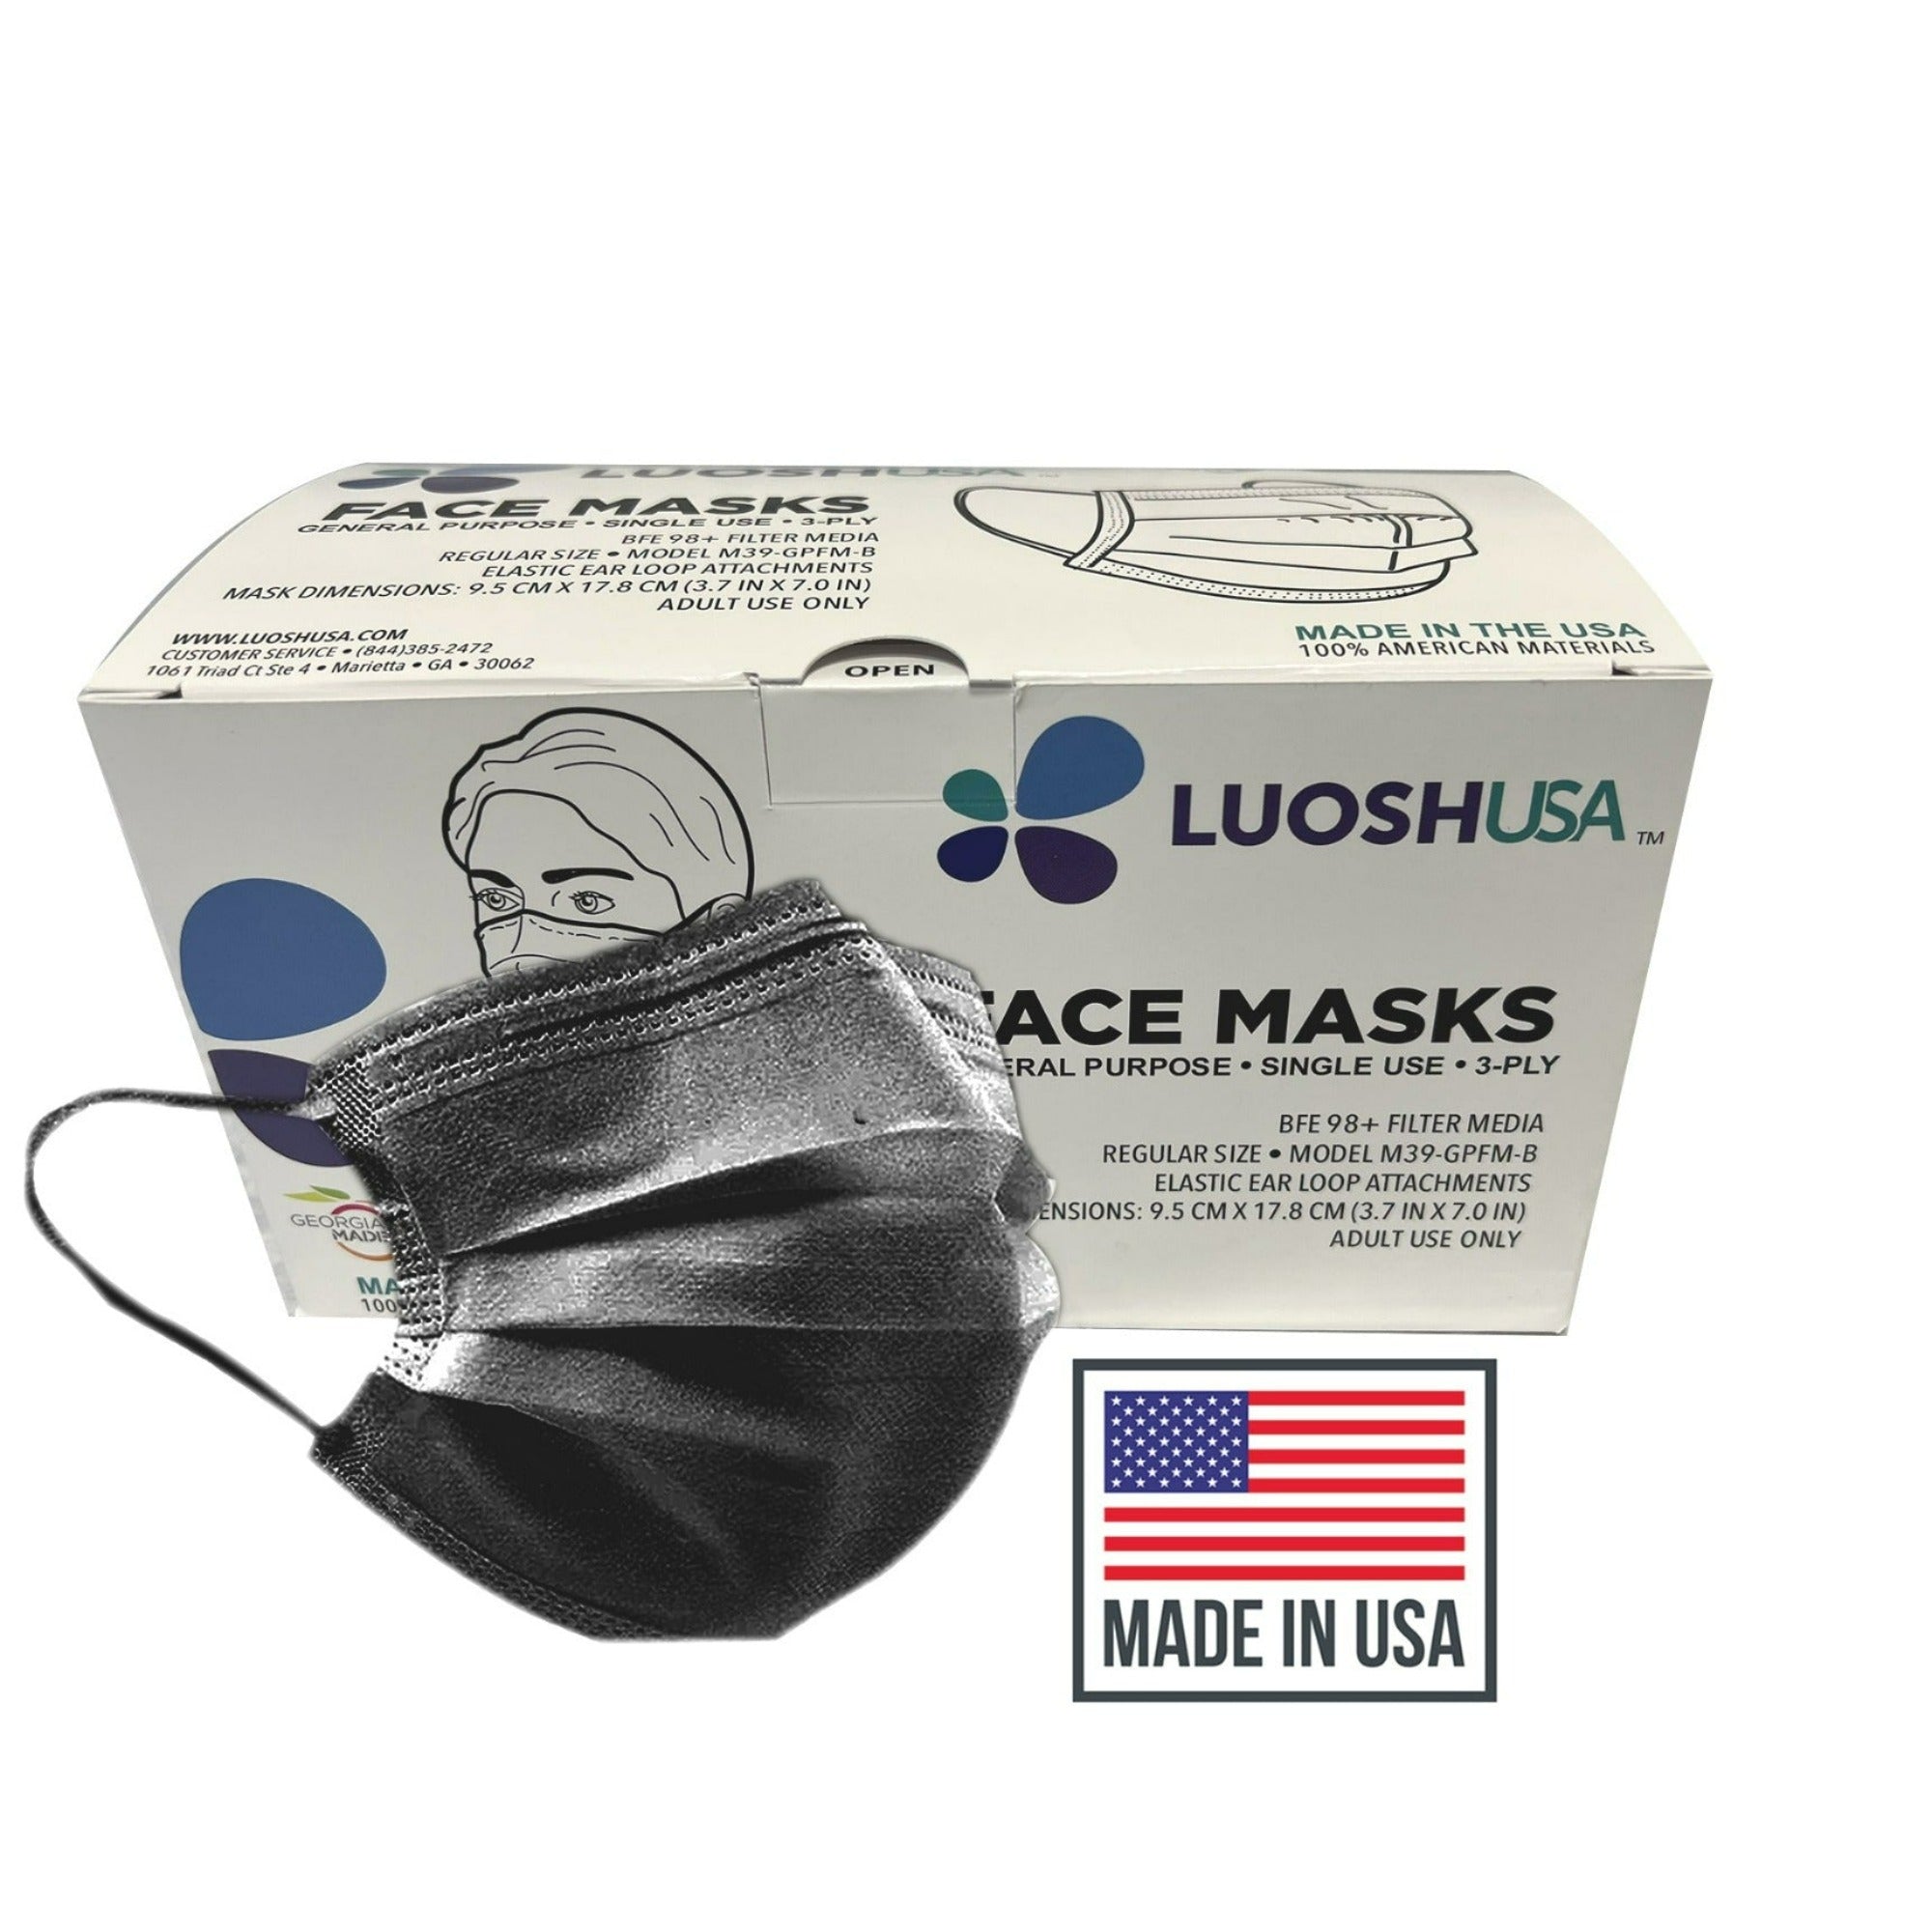 Lv Face Masks Price  Natural Resource Department